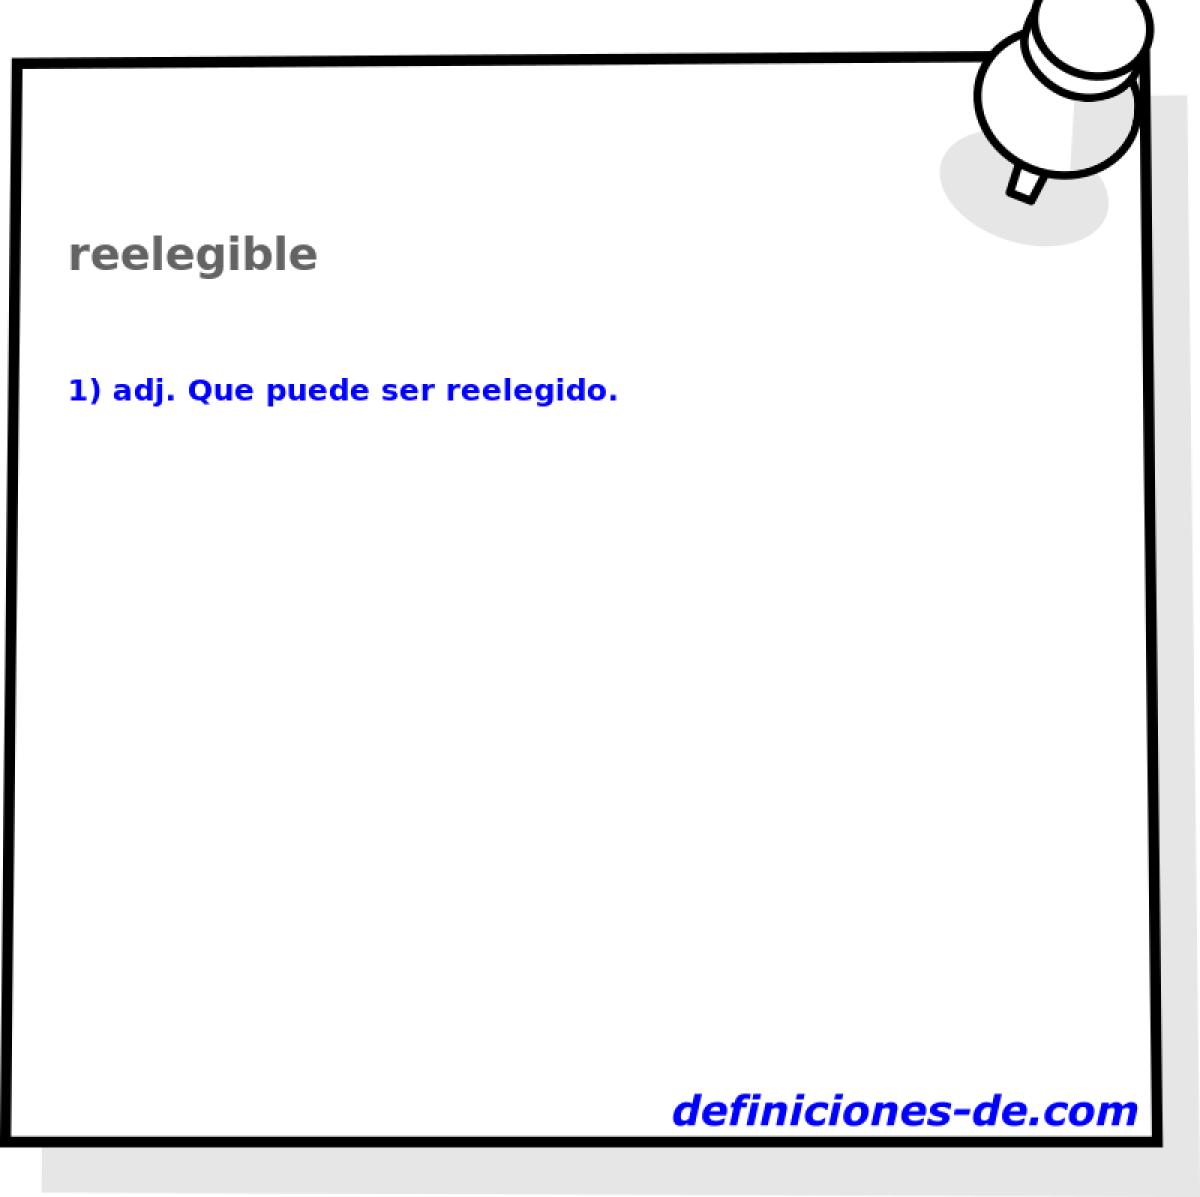 reelegible 